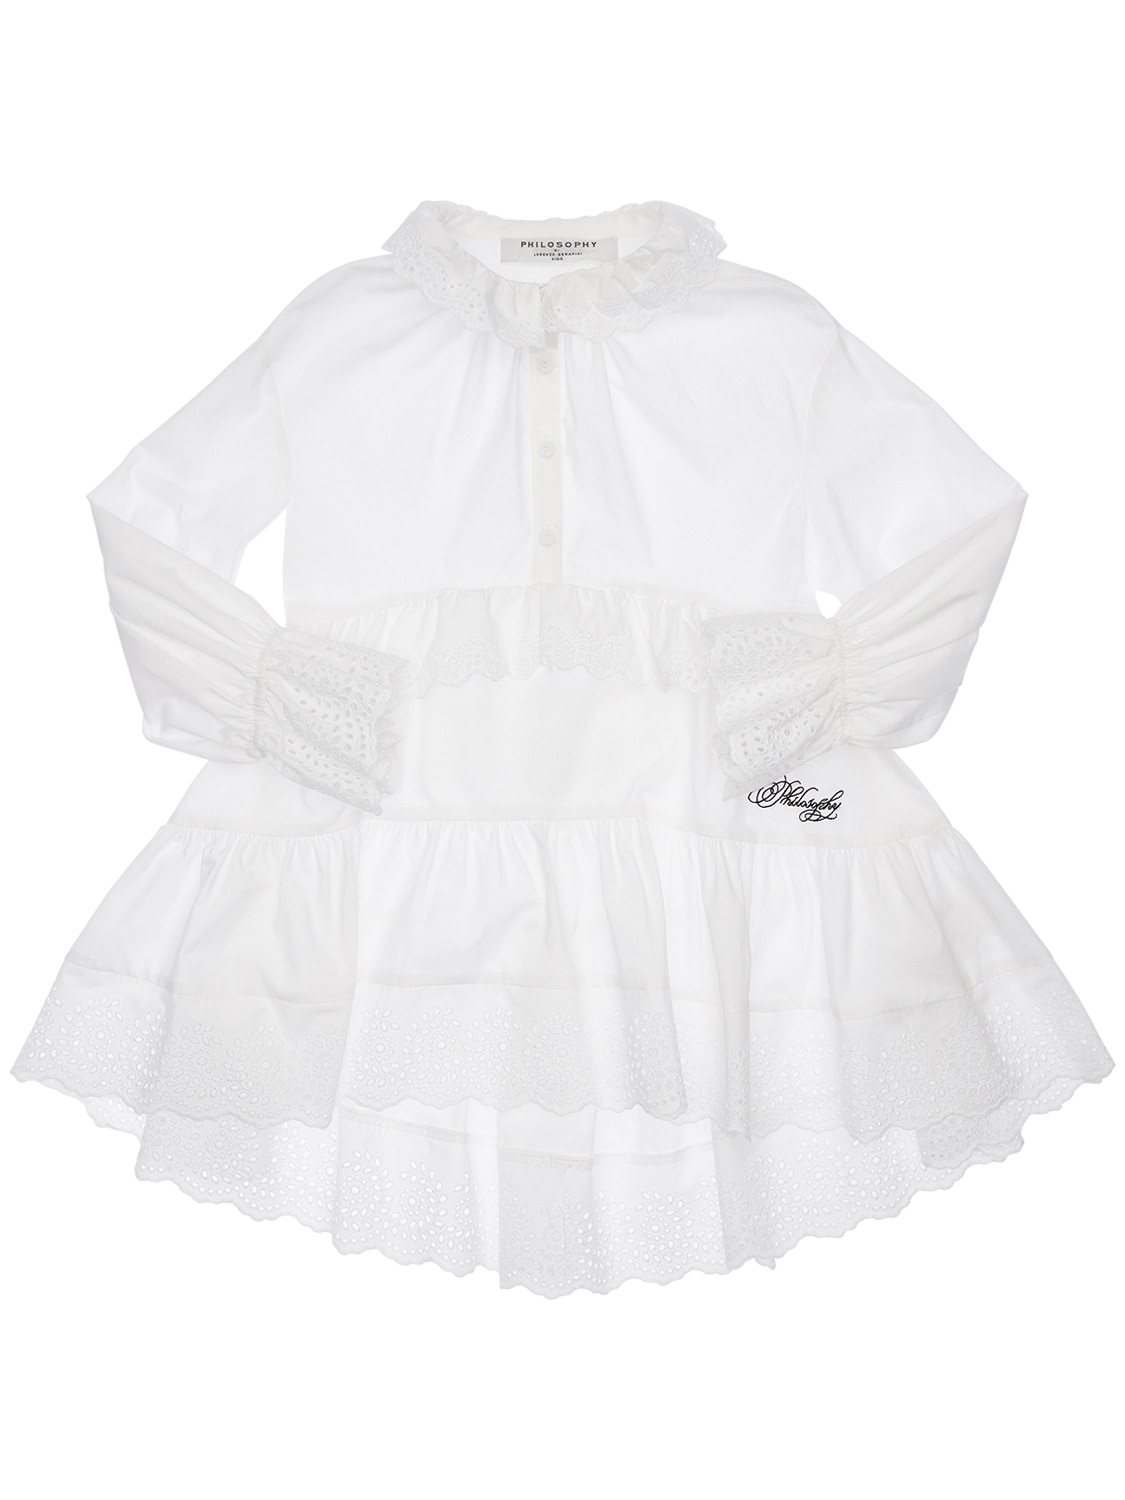 Philosophy Di Lorenzo Serafini Kids' Cotton Poplin Dress W/ Eyelet Lace In White